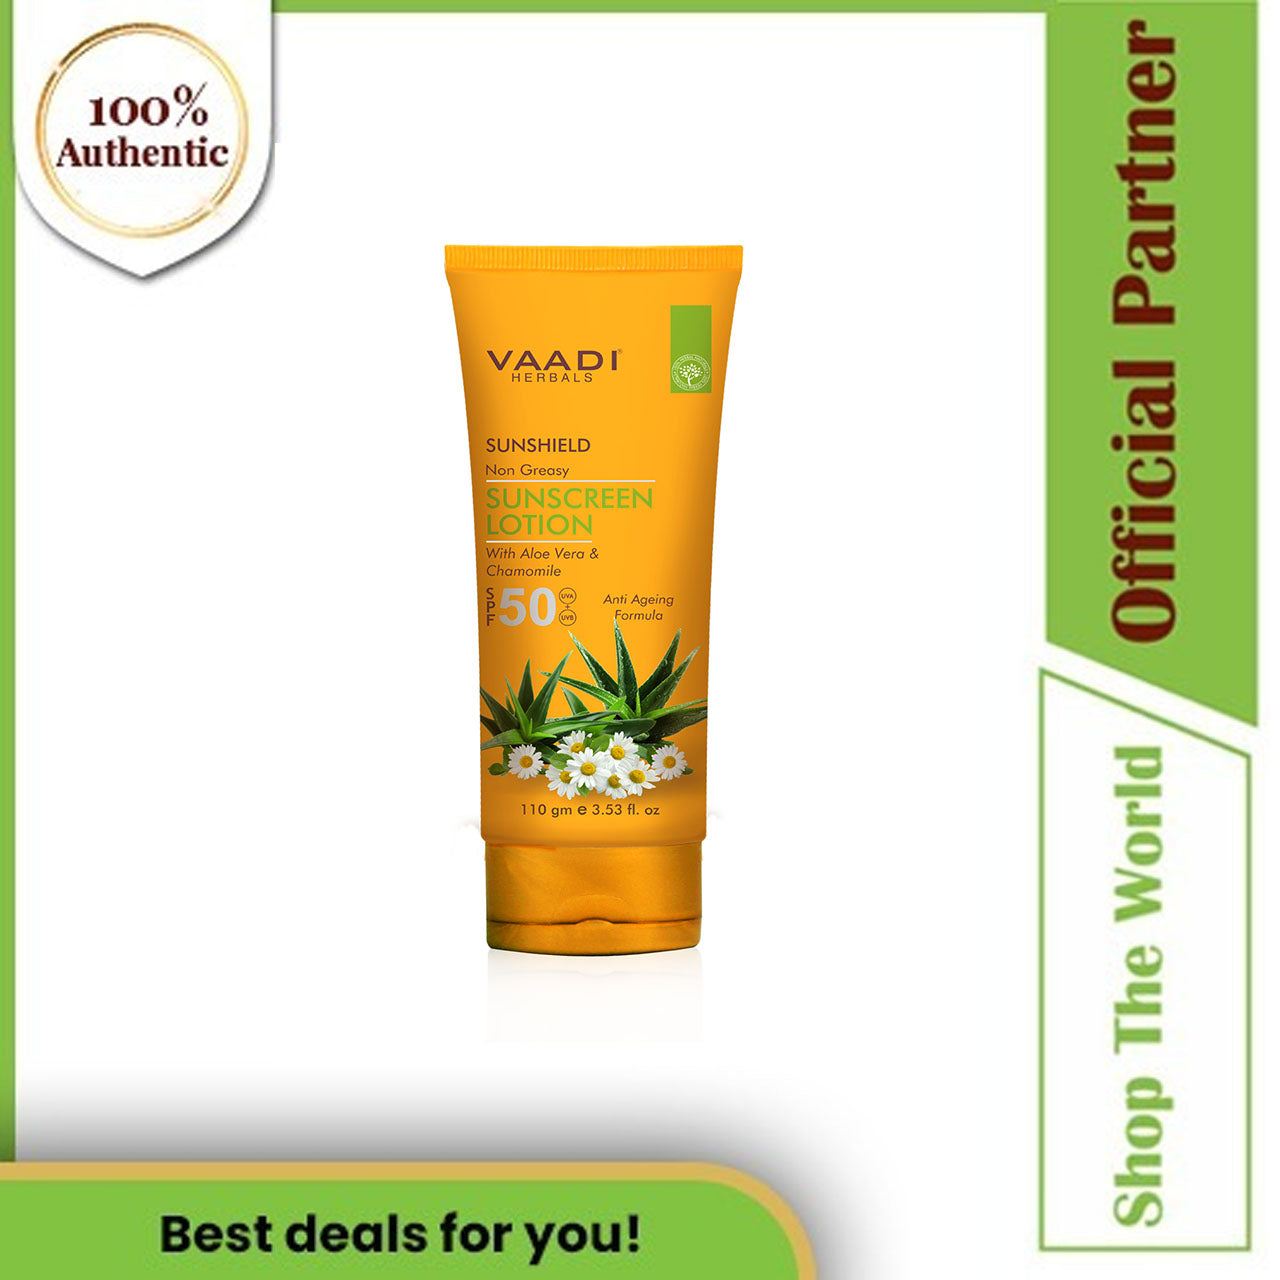 Vaadi Herbals Organic Non Greasy Sunscreen Lotion with Aloe Vera & Chamomile SPF-50, 110 ml (Expiring Sept. 2024)